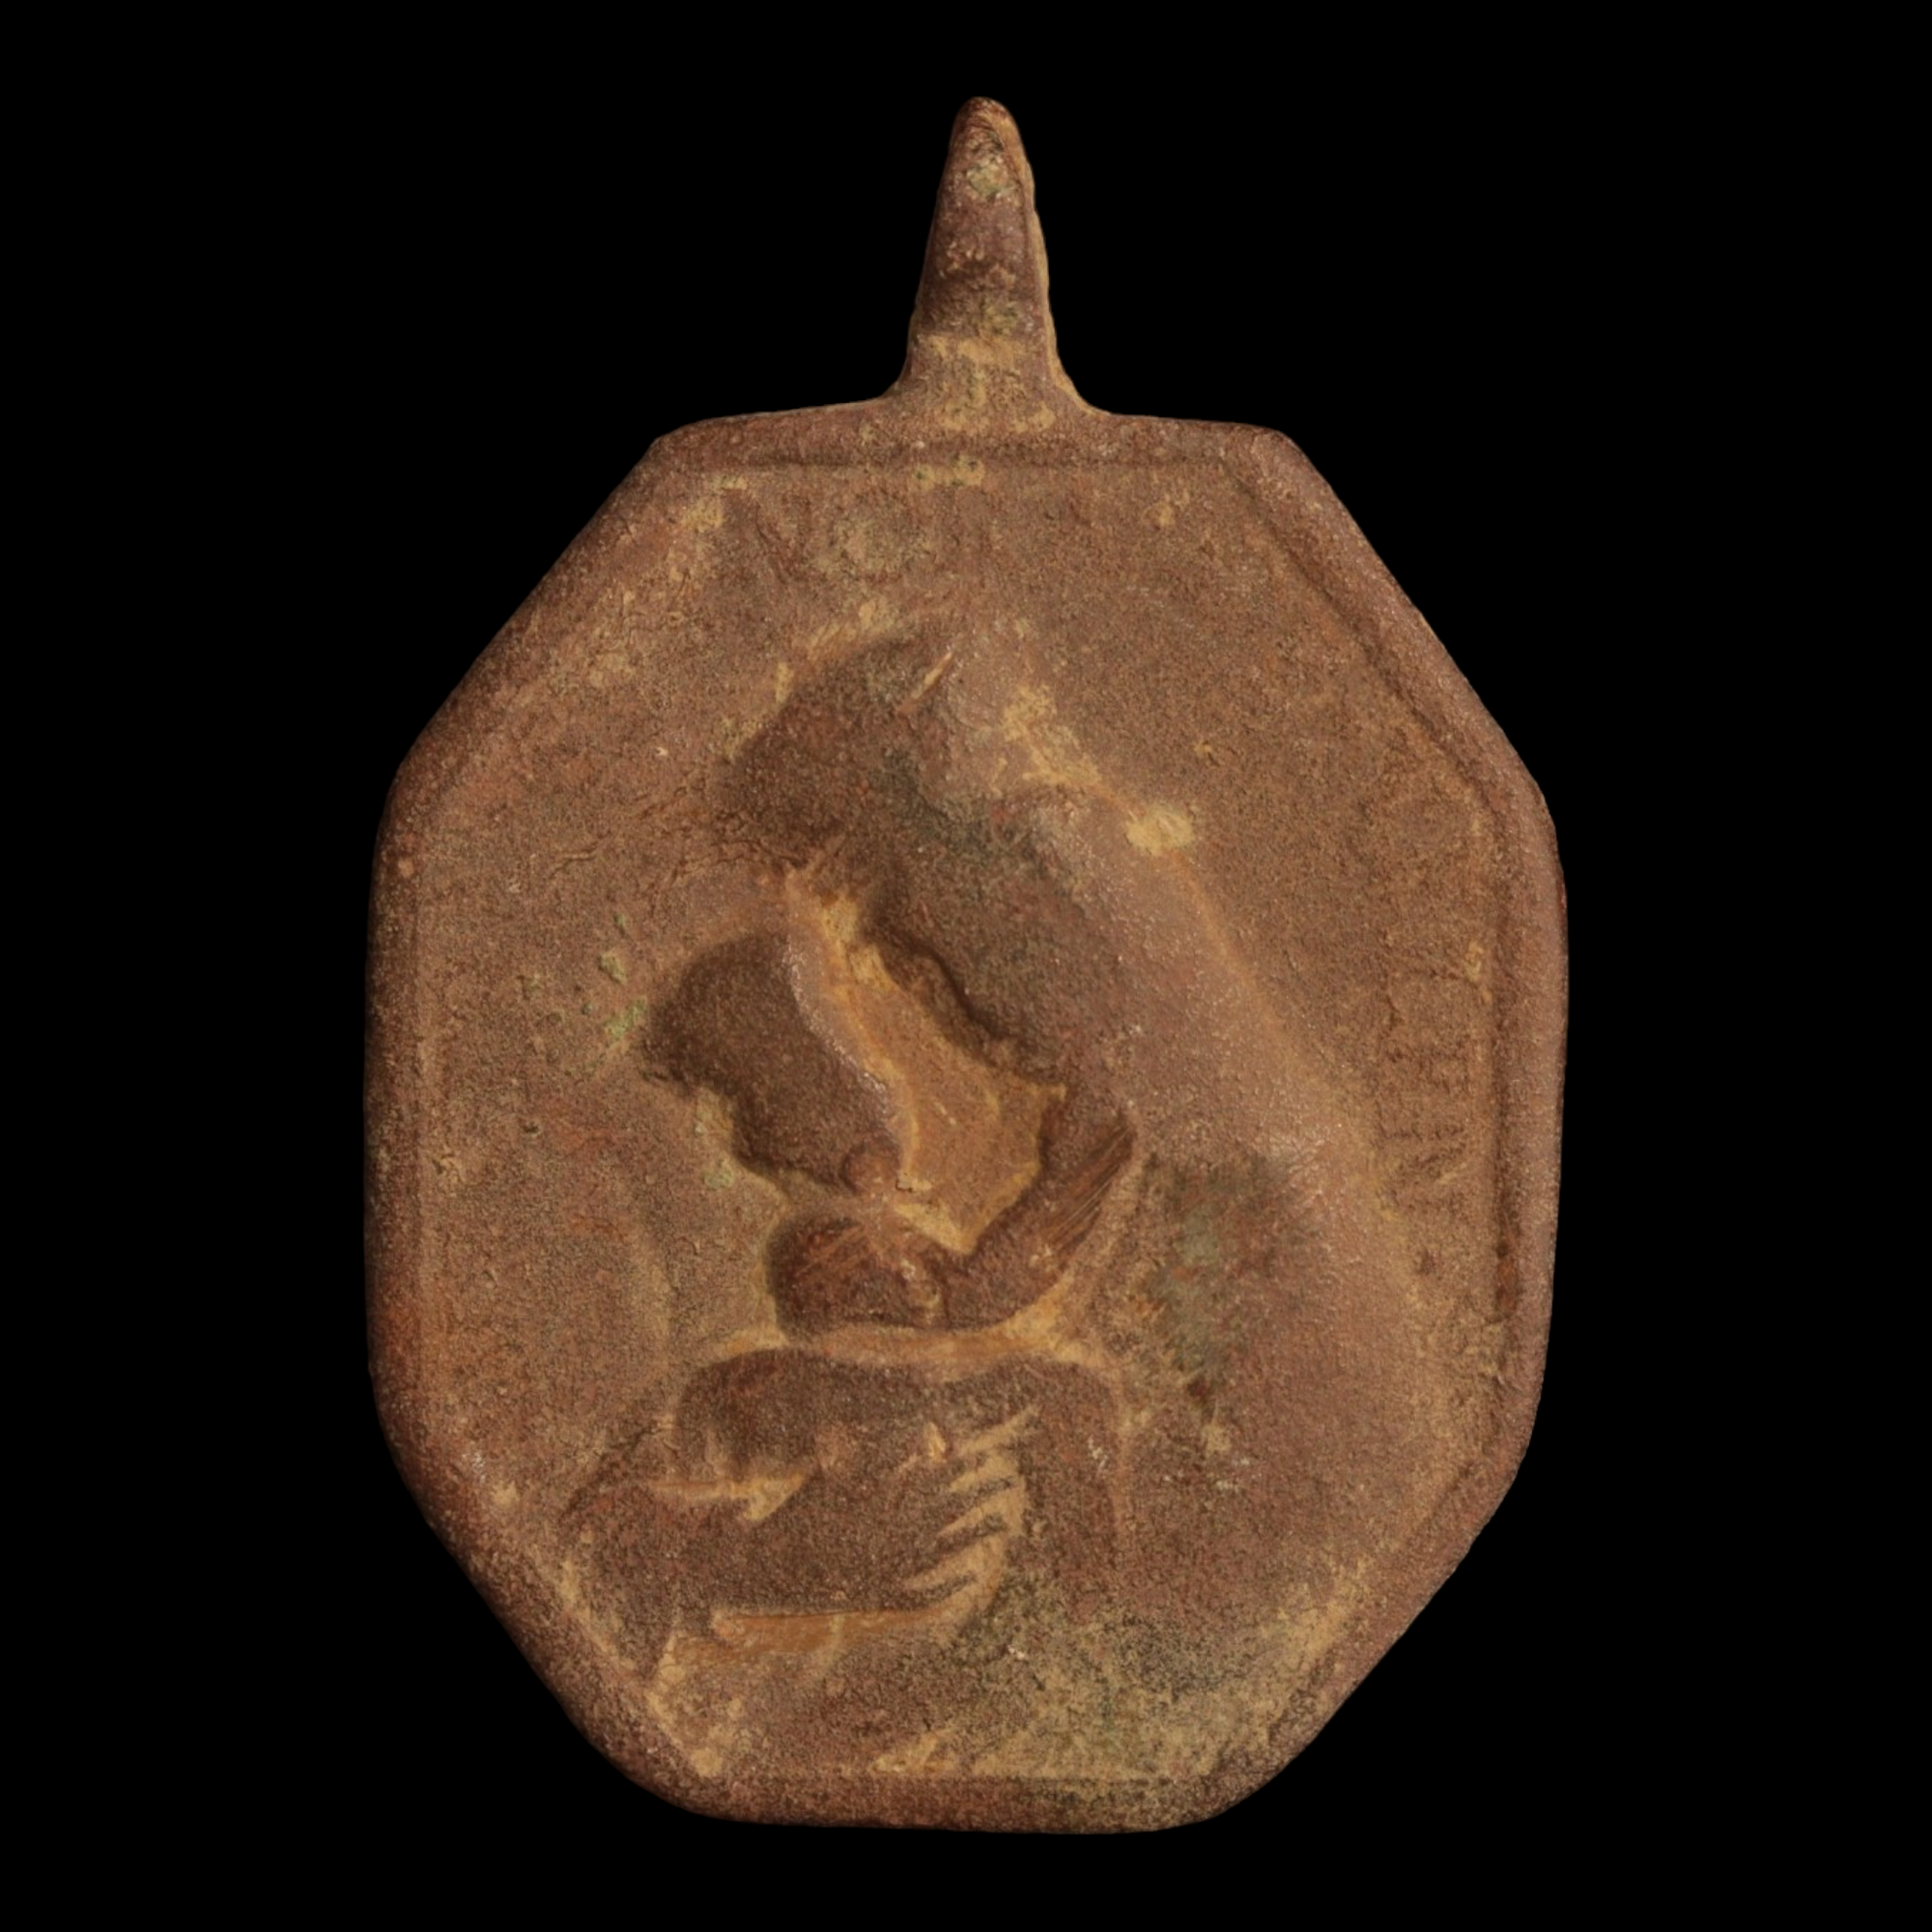 Religious Medal, Catholic Church, 41mm - 1500s to 1700s - Spanish Empire